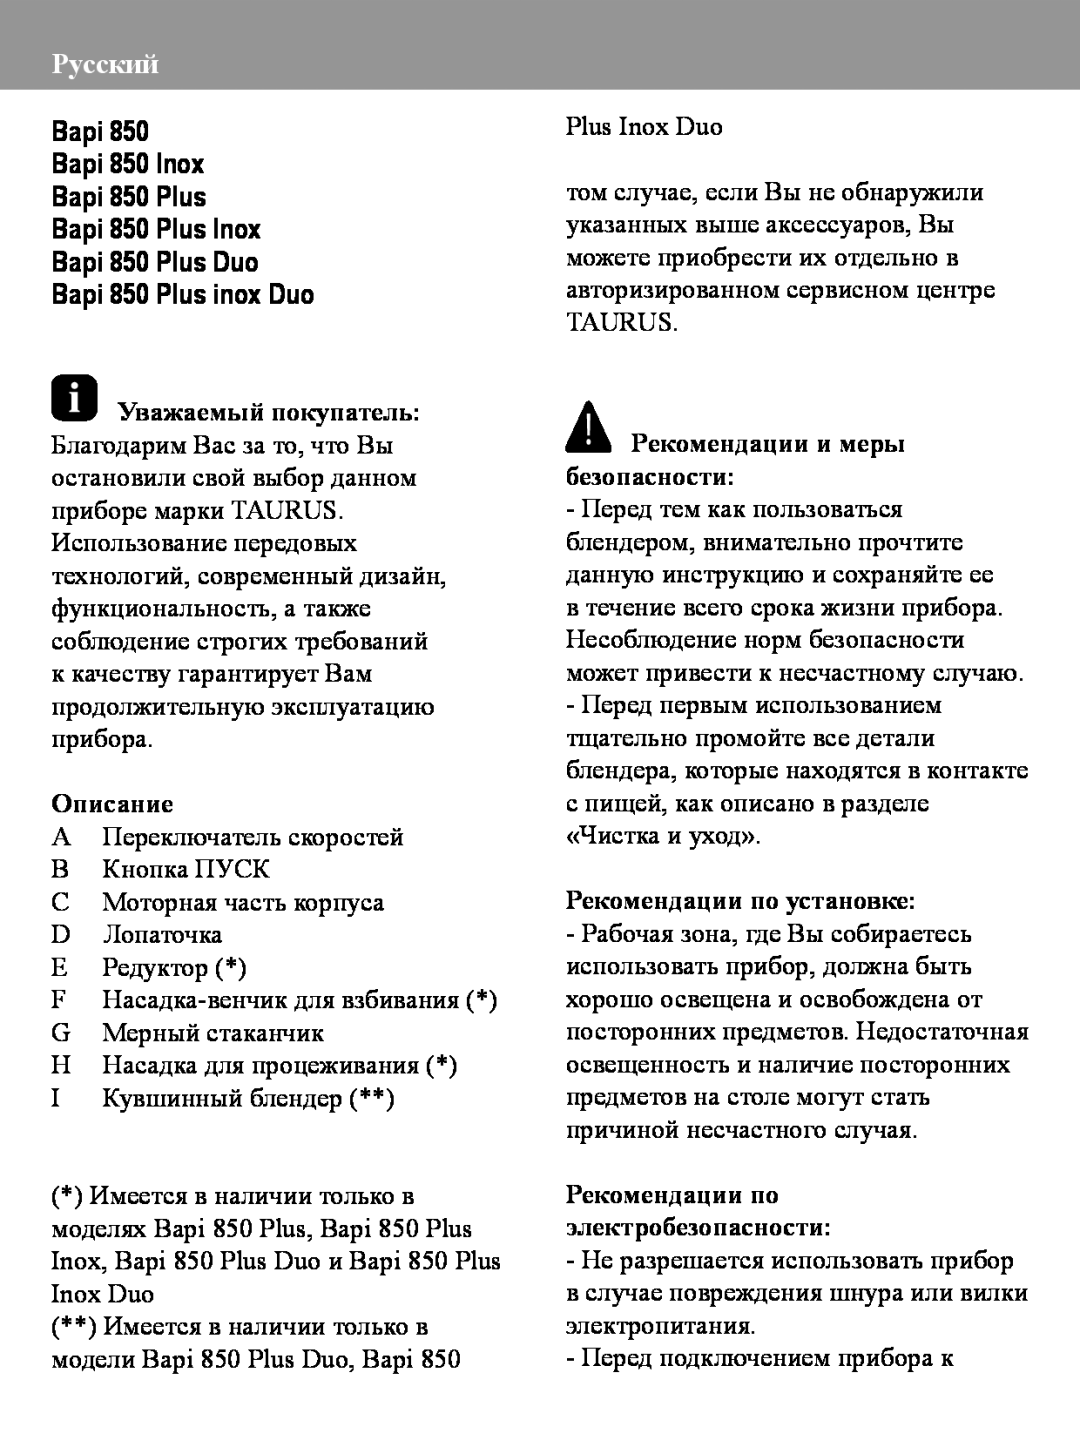 Taurus Group Русский, Описание, Рекомендации и меры безопасности, Рекомендации по установке, Bapi 850 Plus inox Duo 